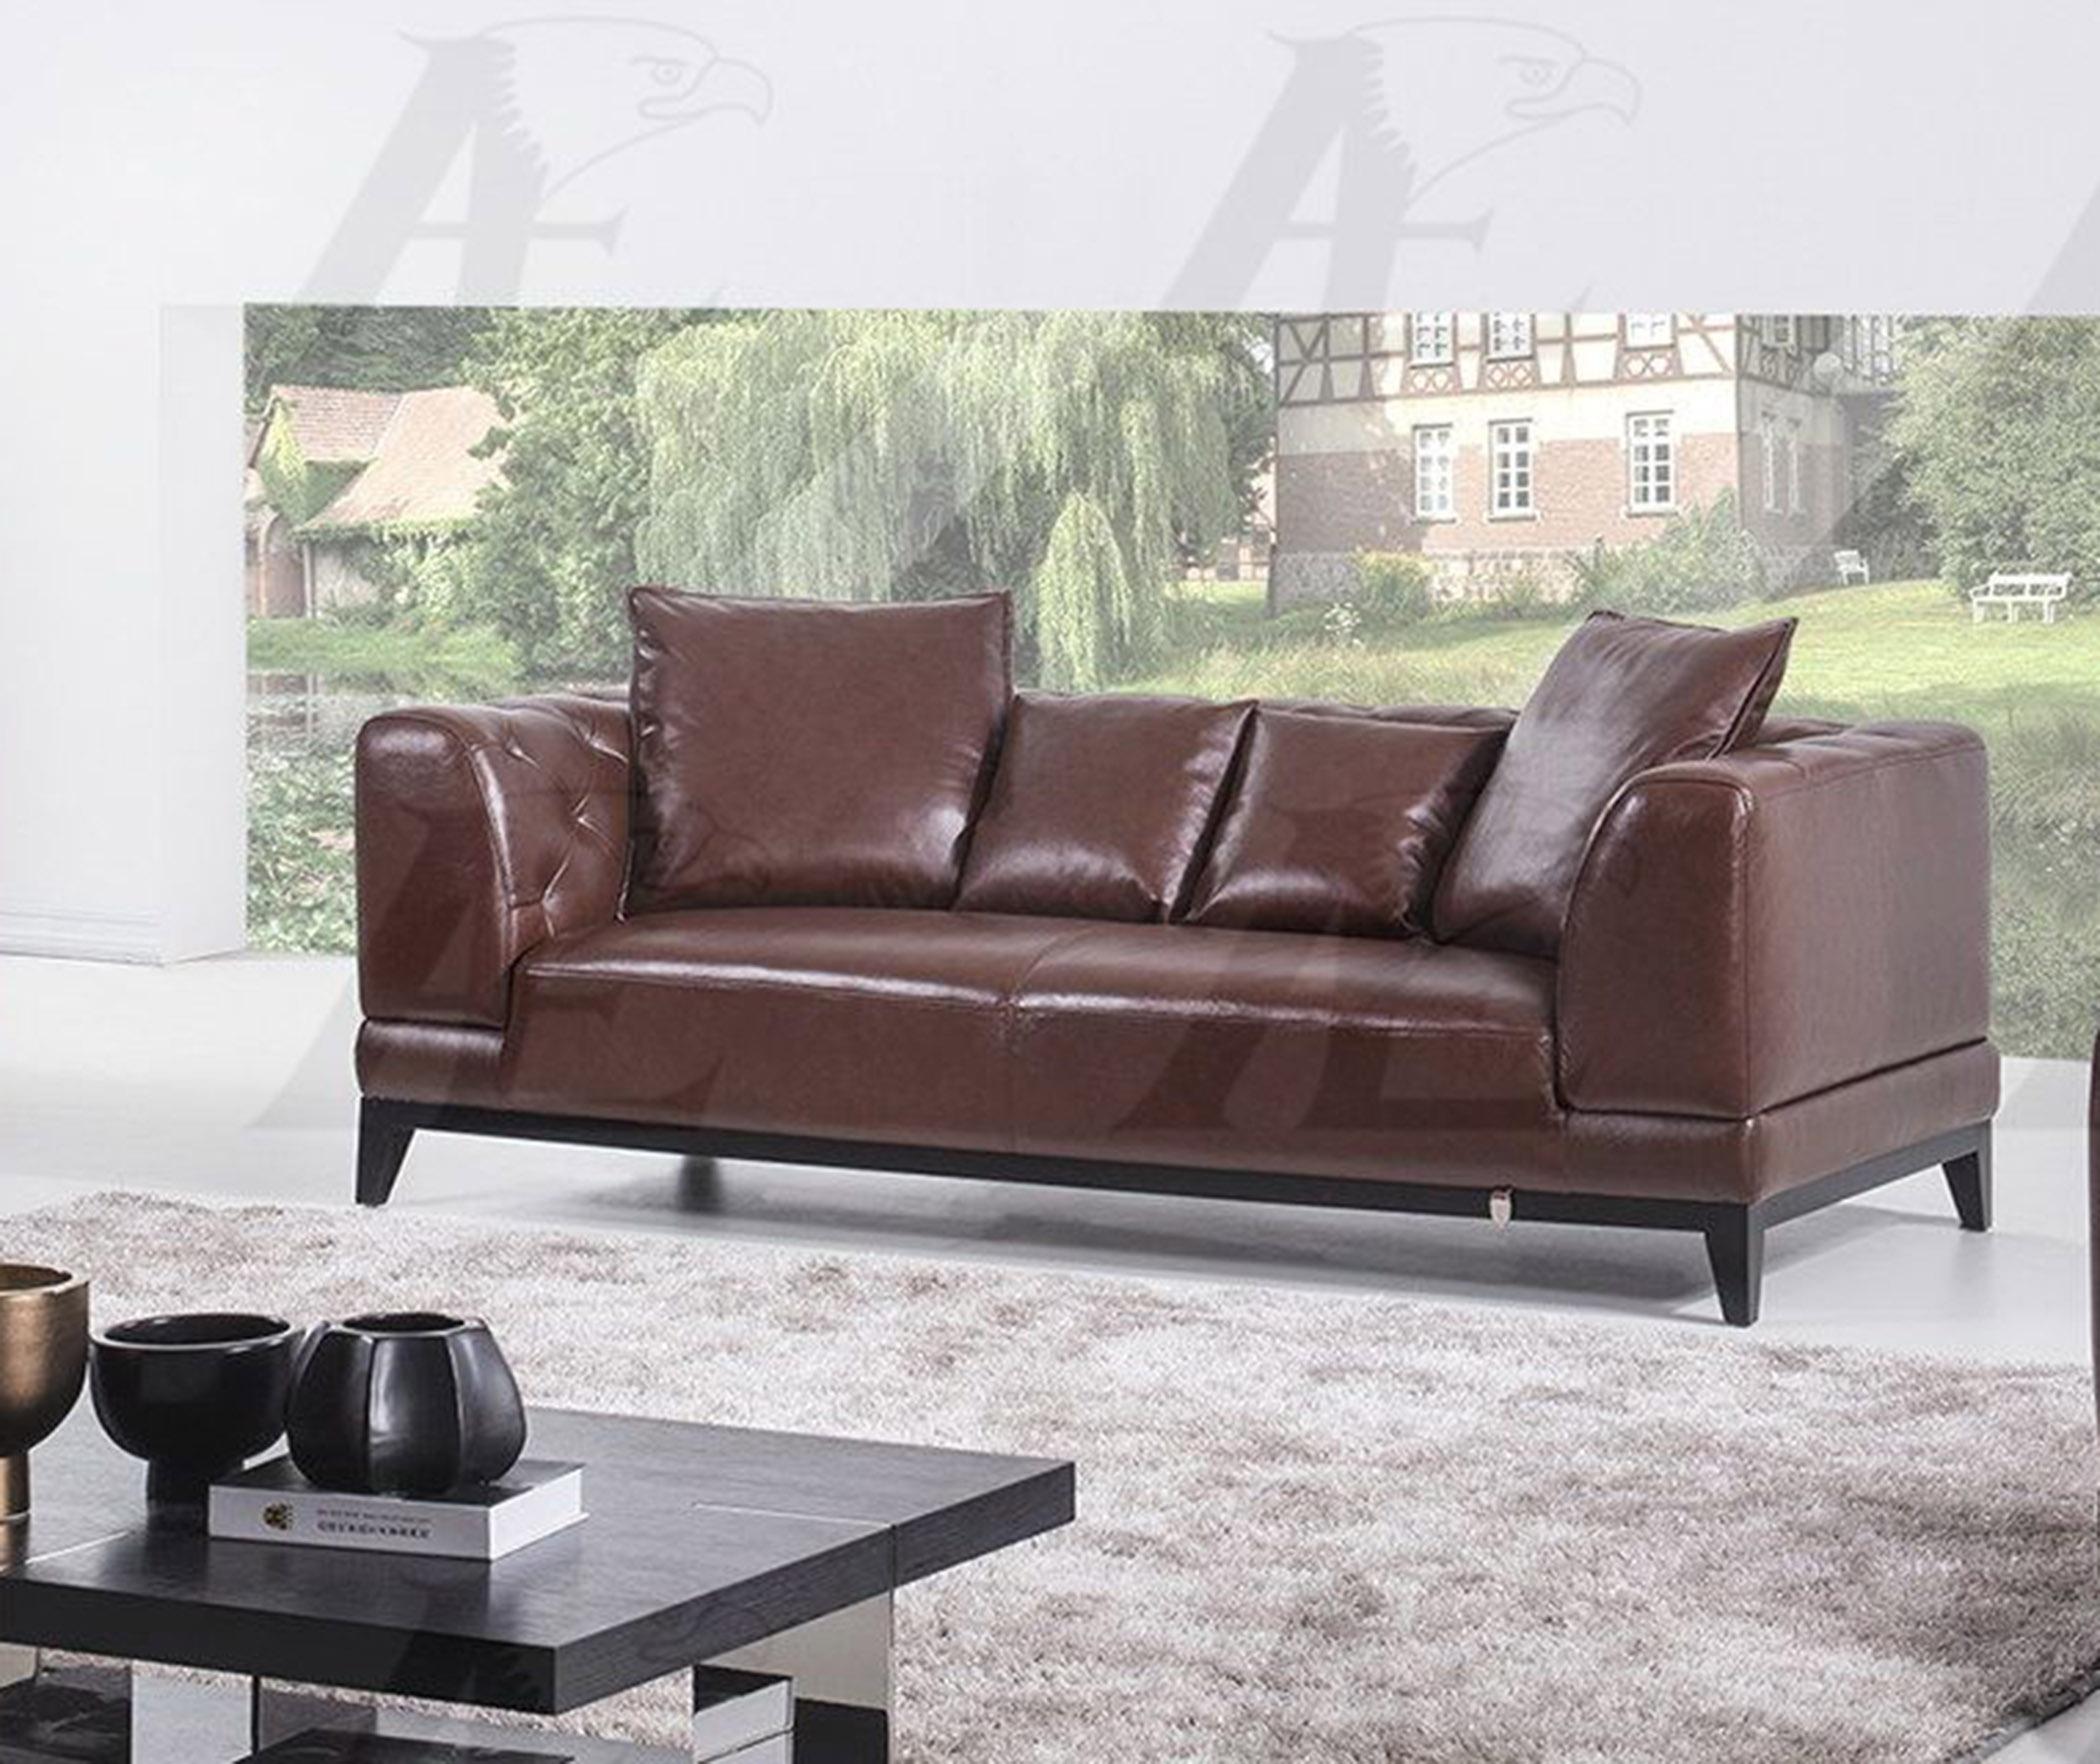 

    
EK065-BR Set-3 American Eagle Furniture Sofa Loveseat and Chair Set
